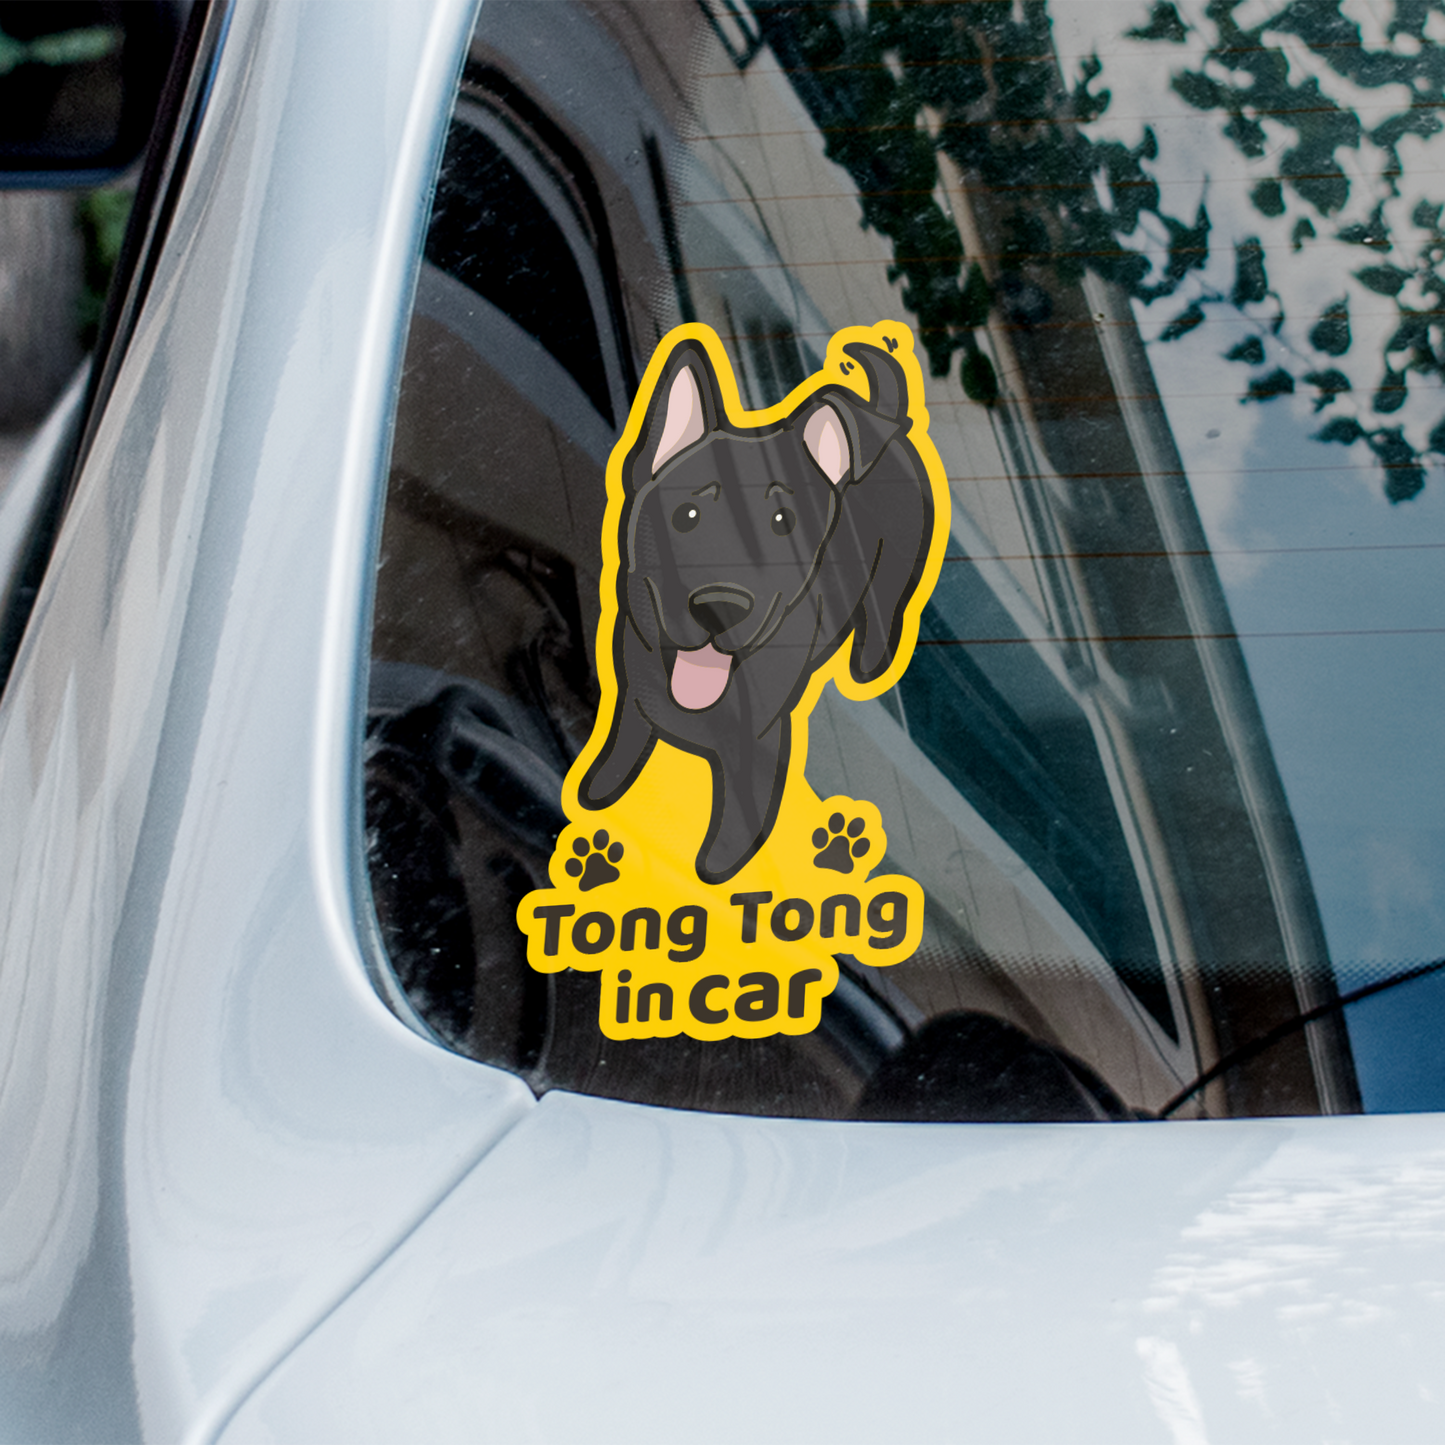 Tong Tong Car Sticker, Mongrel Cute Dog Vinyl Sticker, Sticks On The Inside Facing Out